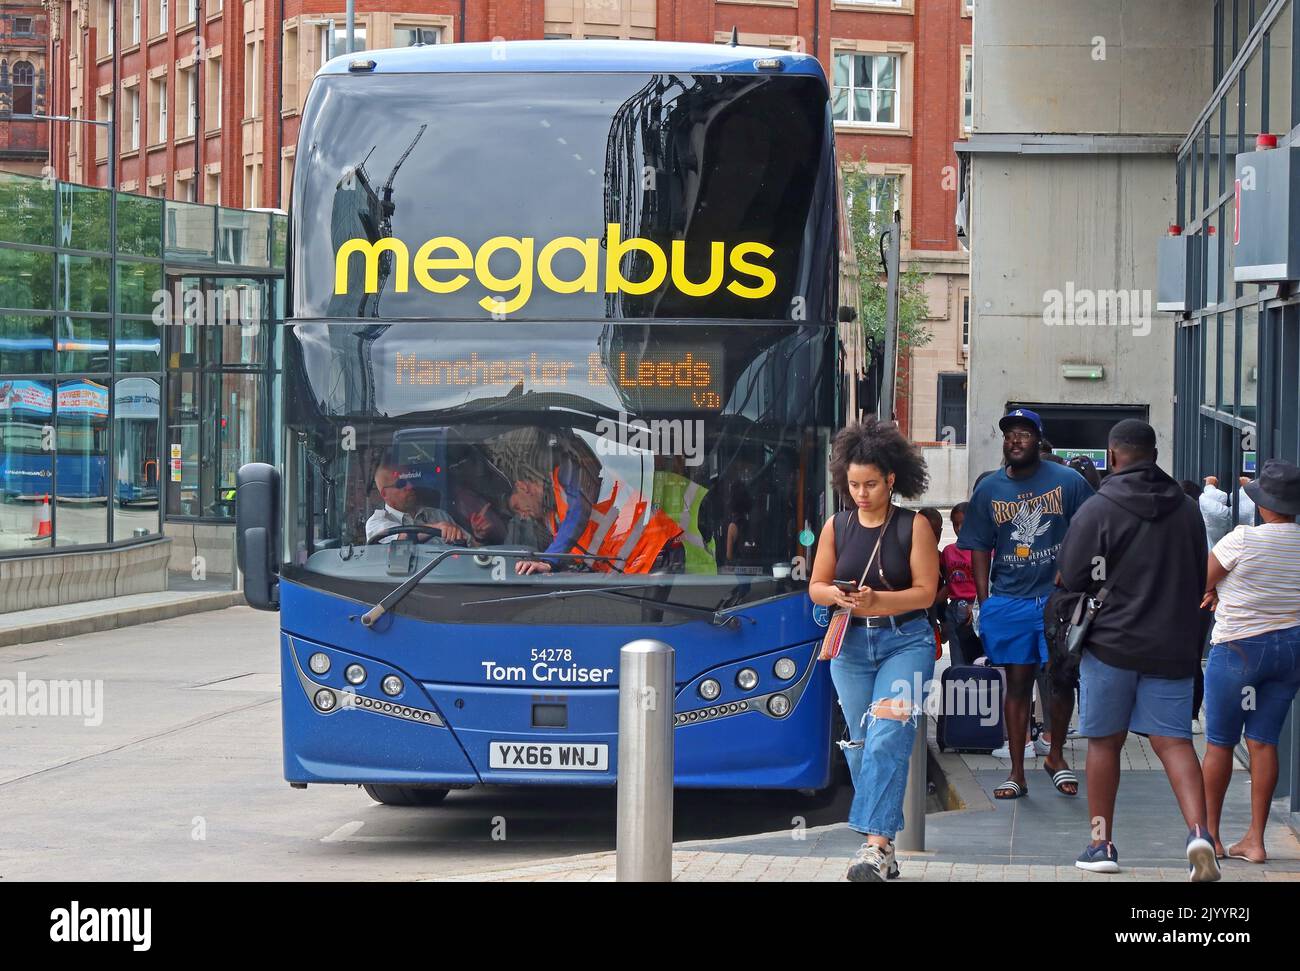 Megabus to Leeds , in Shudehill bus station and interchange, Manchester, England, UK, M4 2AF, Tom Cruiser , YX66 WNJ Stock Photo